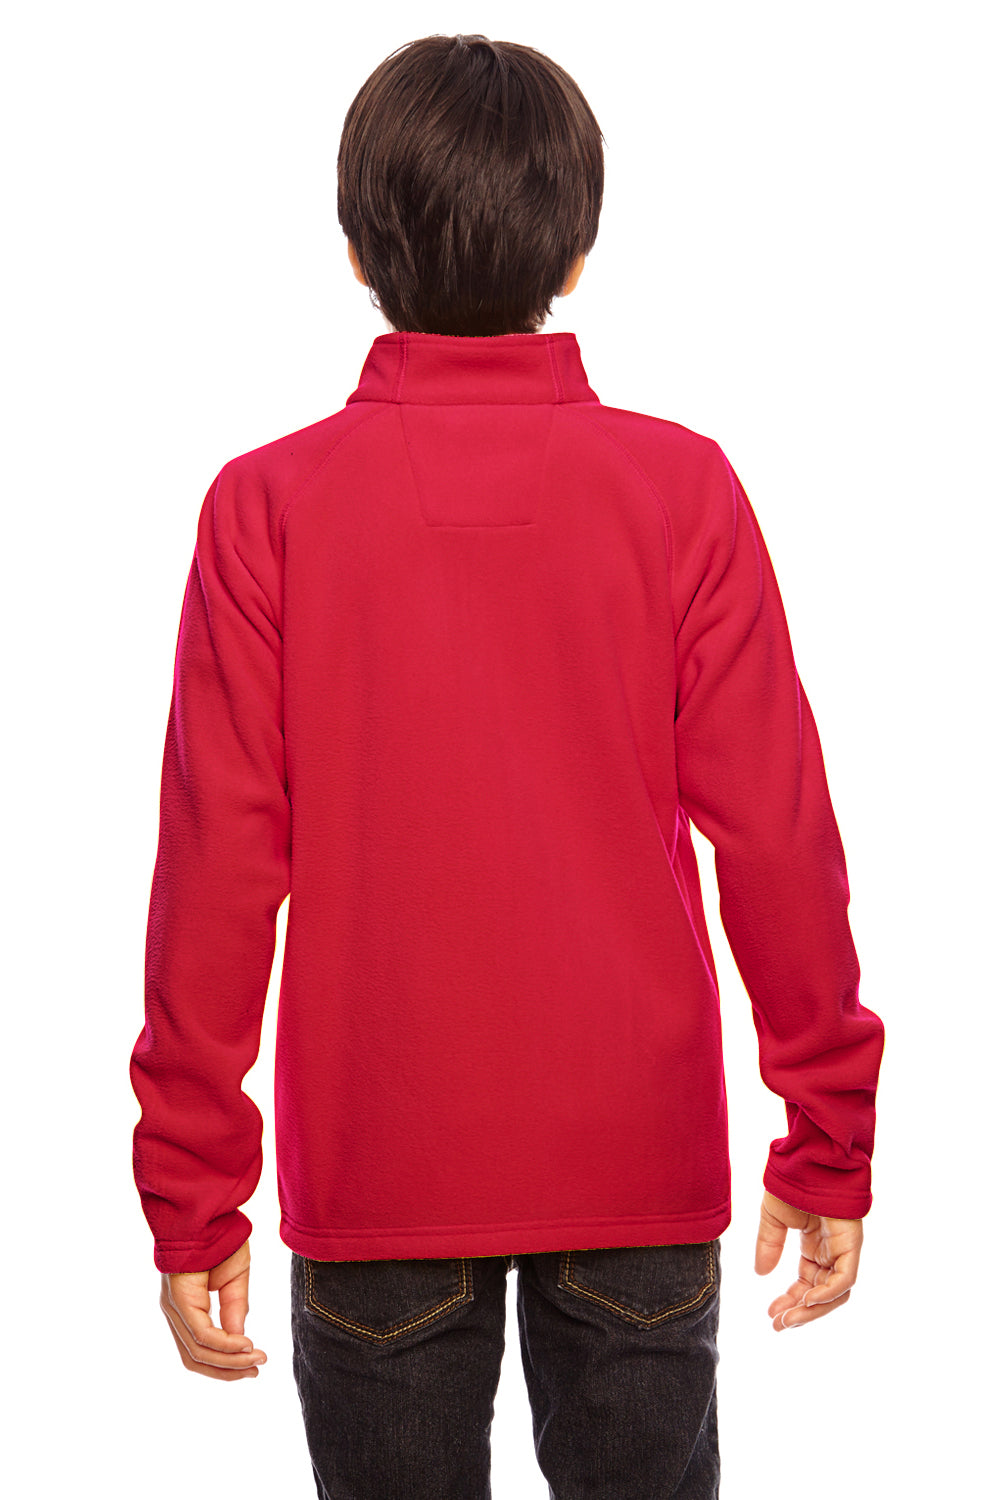 Team 365 TT90Y Youth Campus Full Zip Microfleece Jacket Red Back